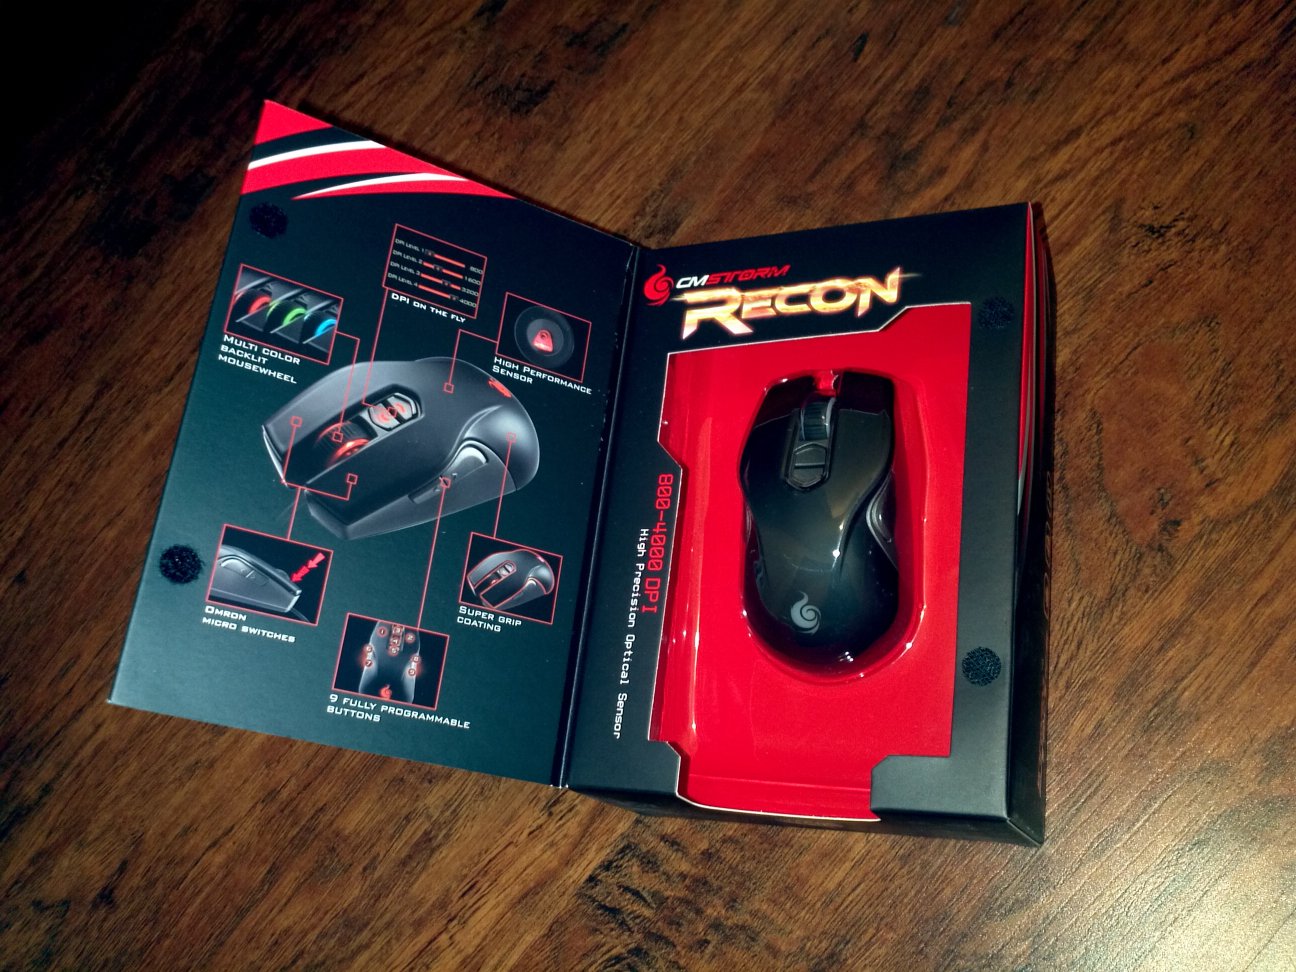 CM Recon mouse 2015 box cover open